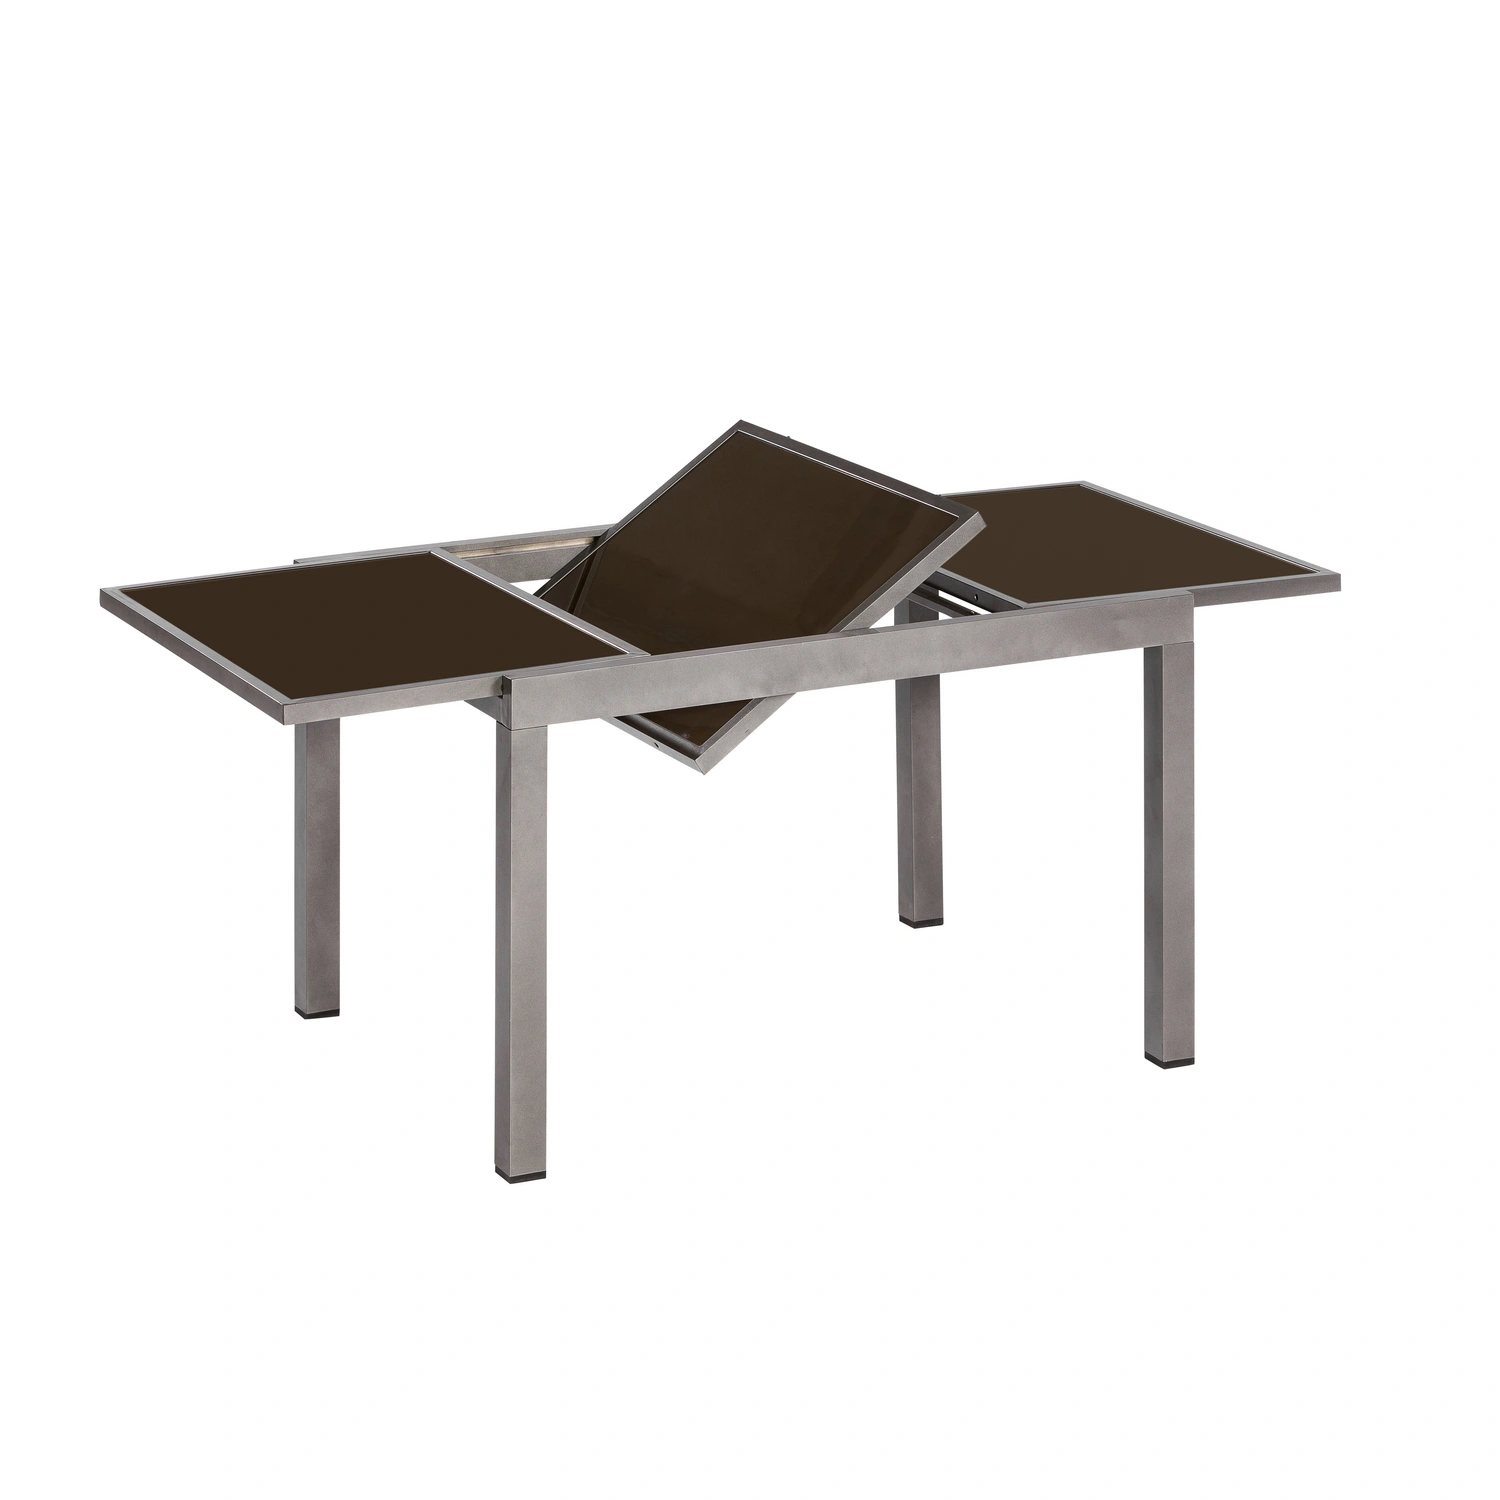 MERXX Gartenmöbelset »Taviano«, 4 Sitzplätze, Aluminium/Textil